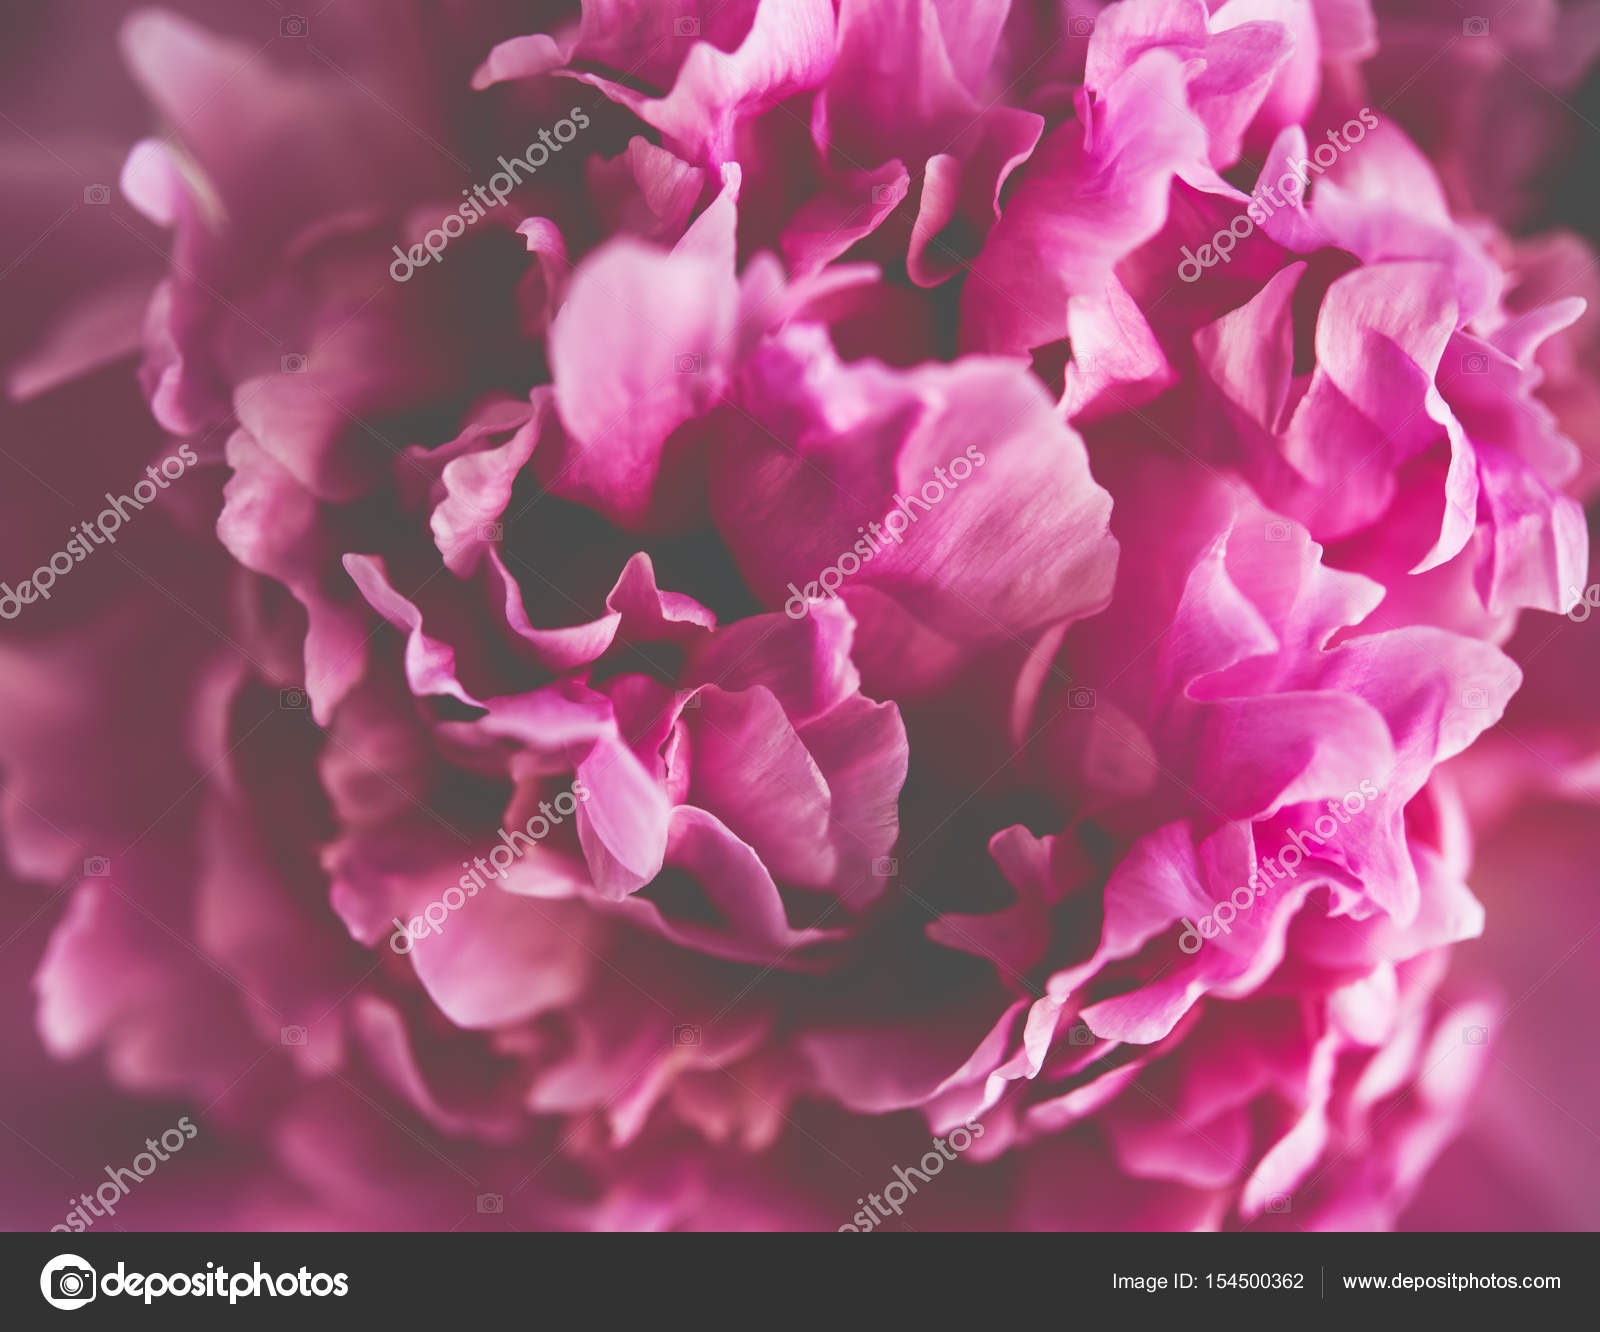 pink peony flower petals macro shot, elegant natural floral wedd ...